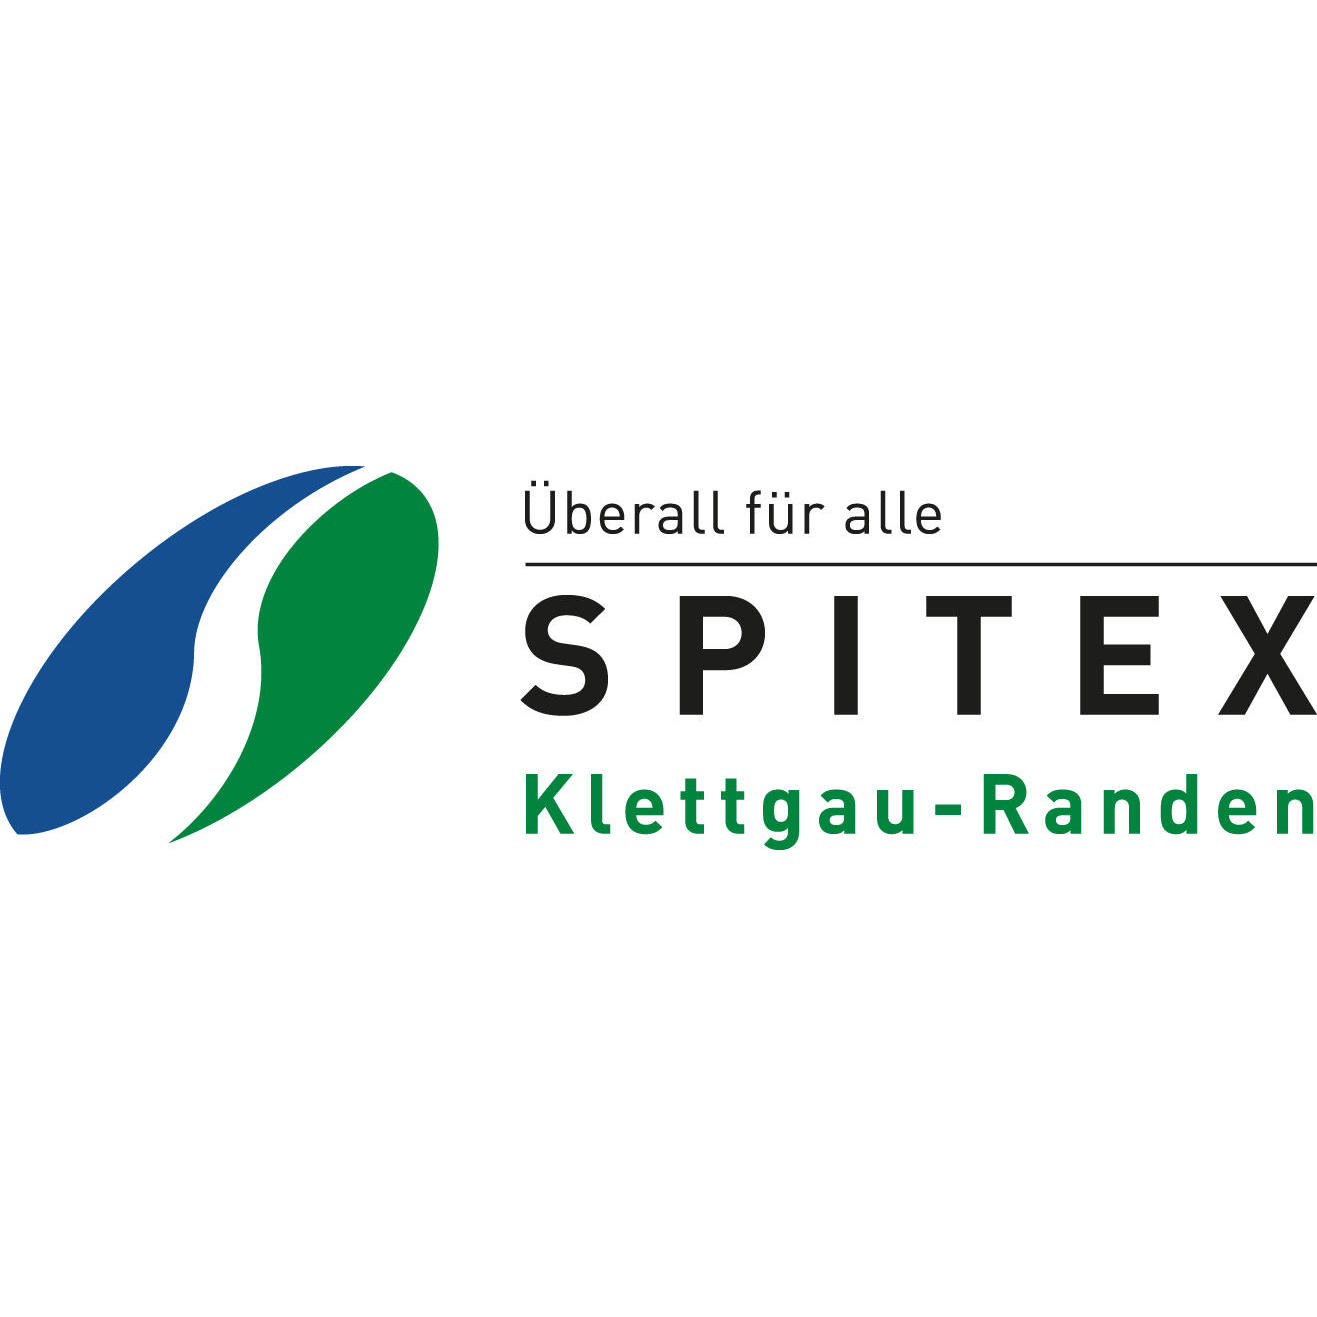 SPITEX Klettgau-Randen Logo